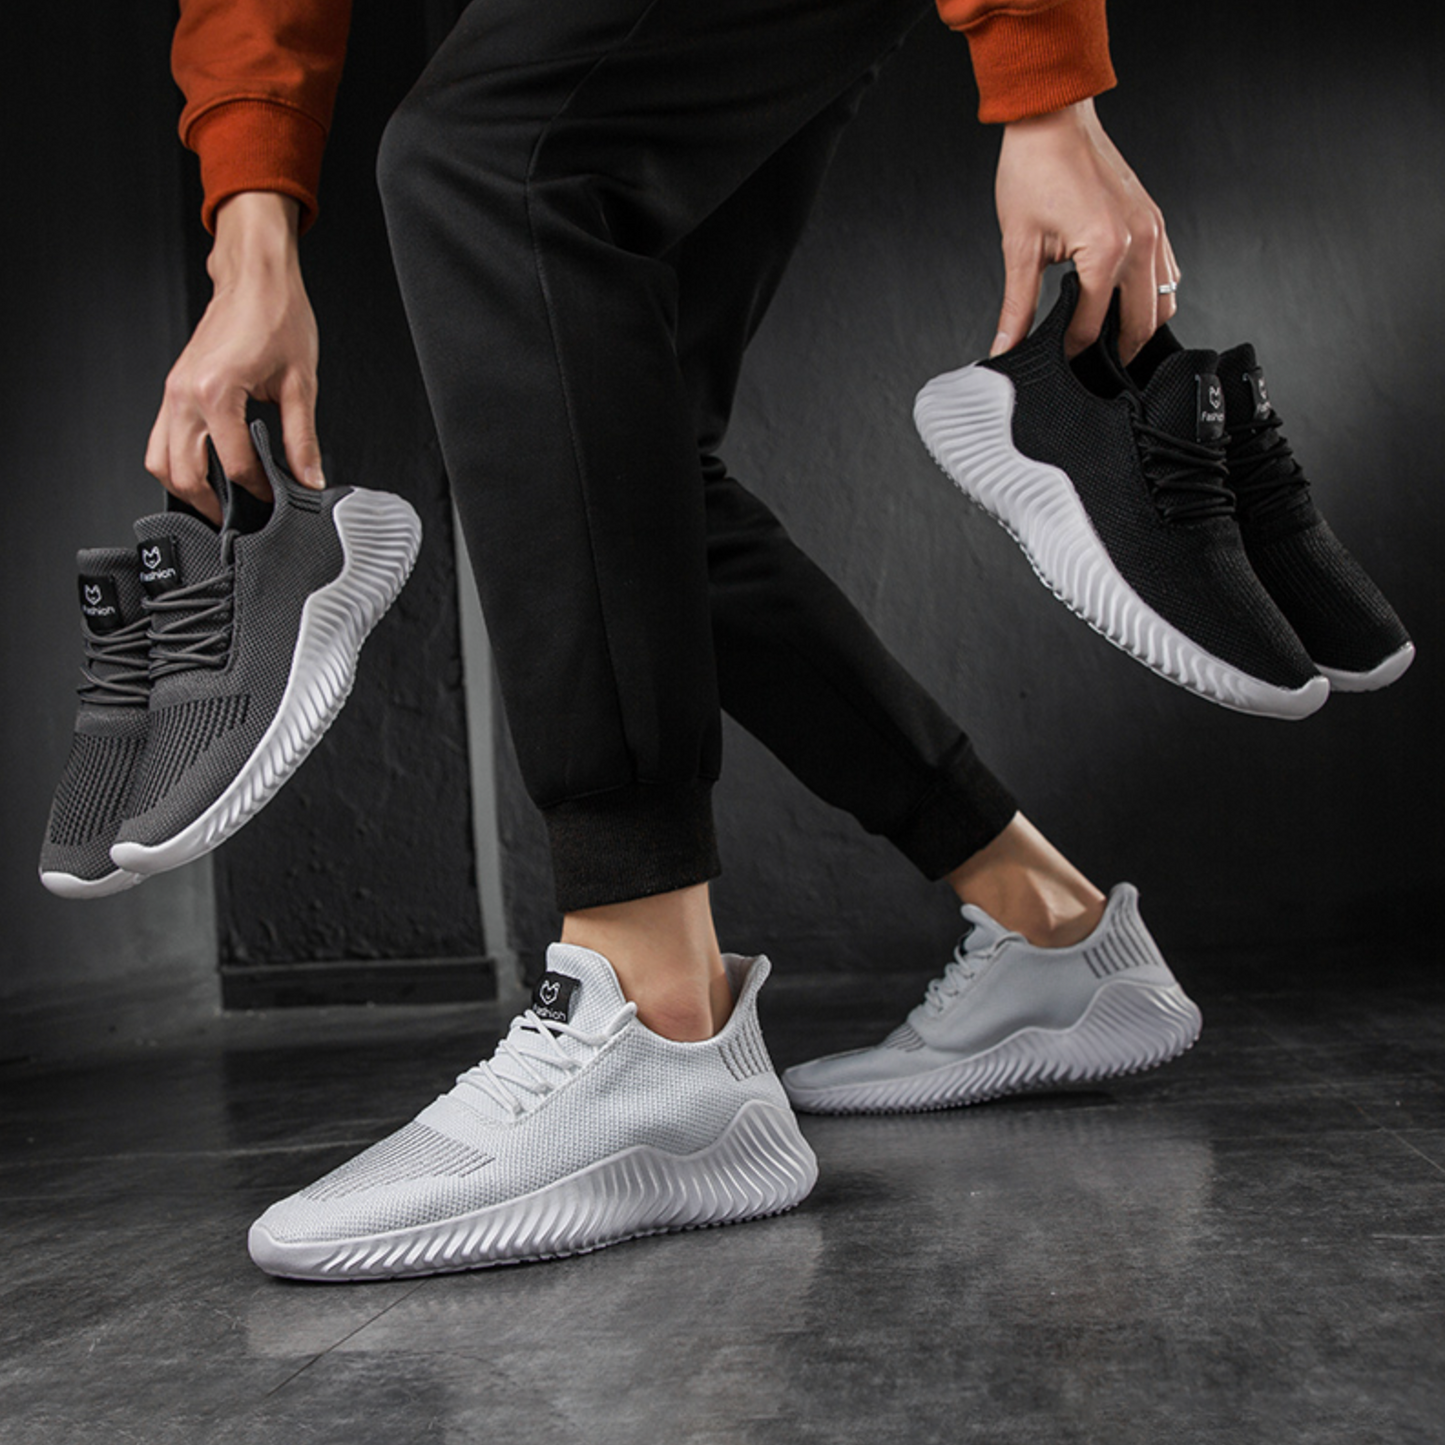 Men's Orthopedic Walking Running Shoes, Mesh Breathable Lightweight Non Slip Athletic Sneakers